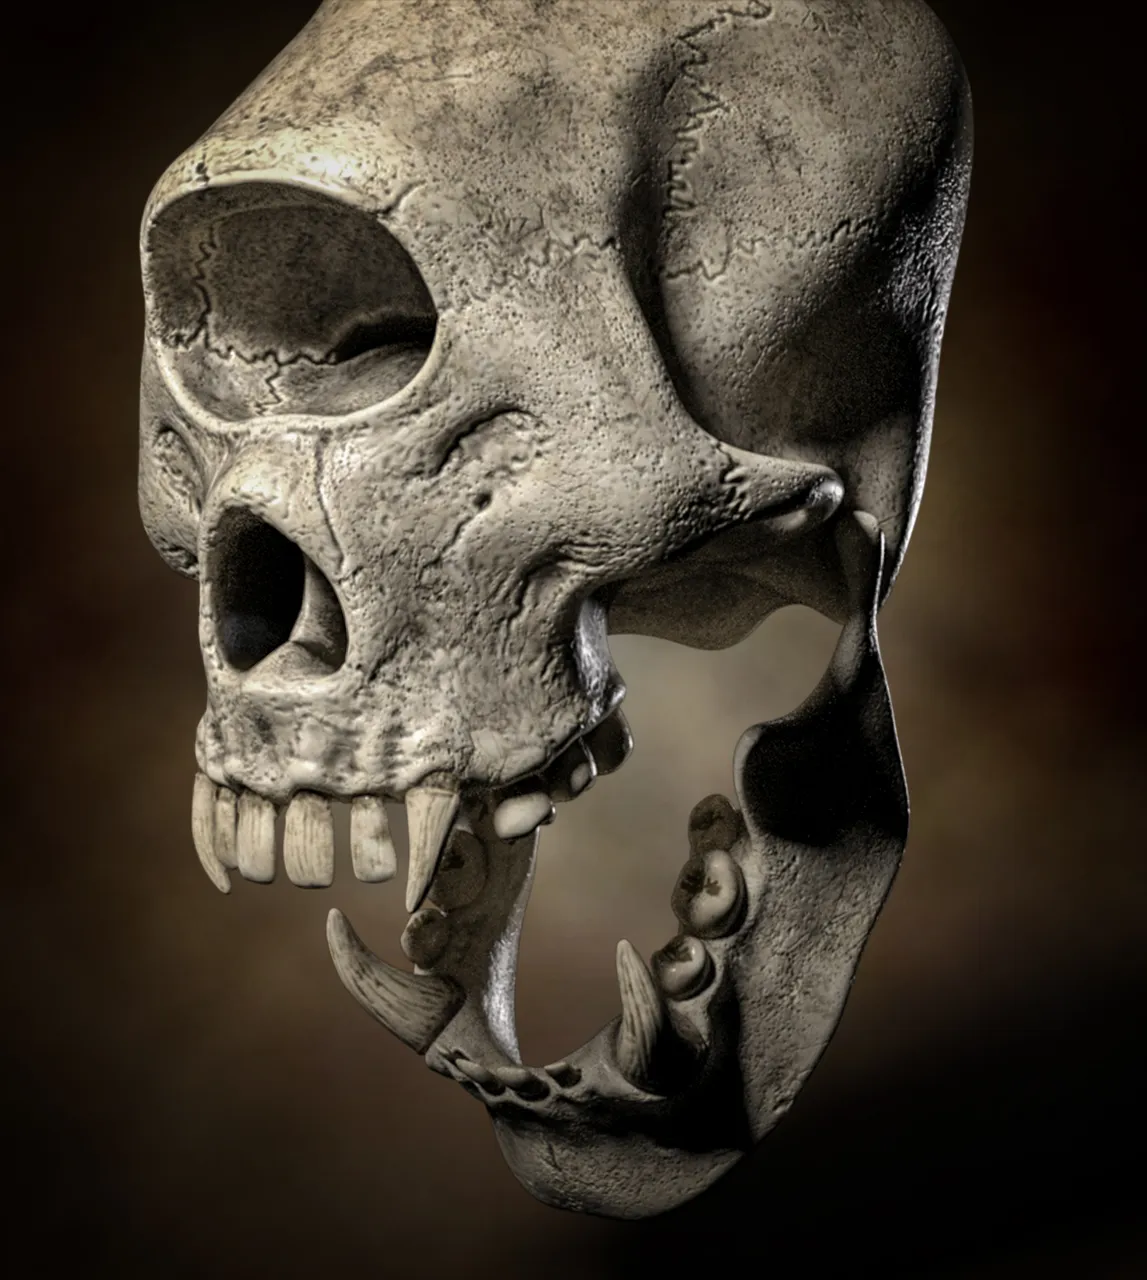 cyclop skull4 retouch.jpg